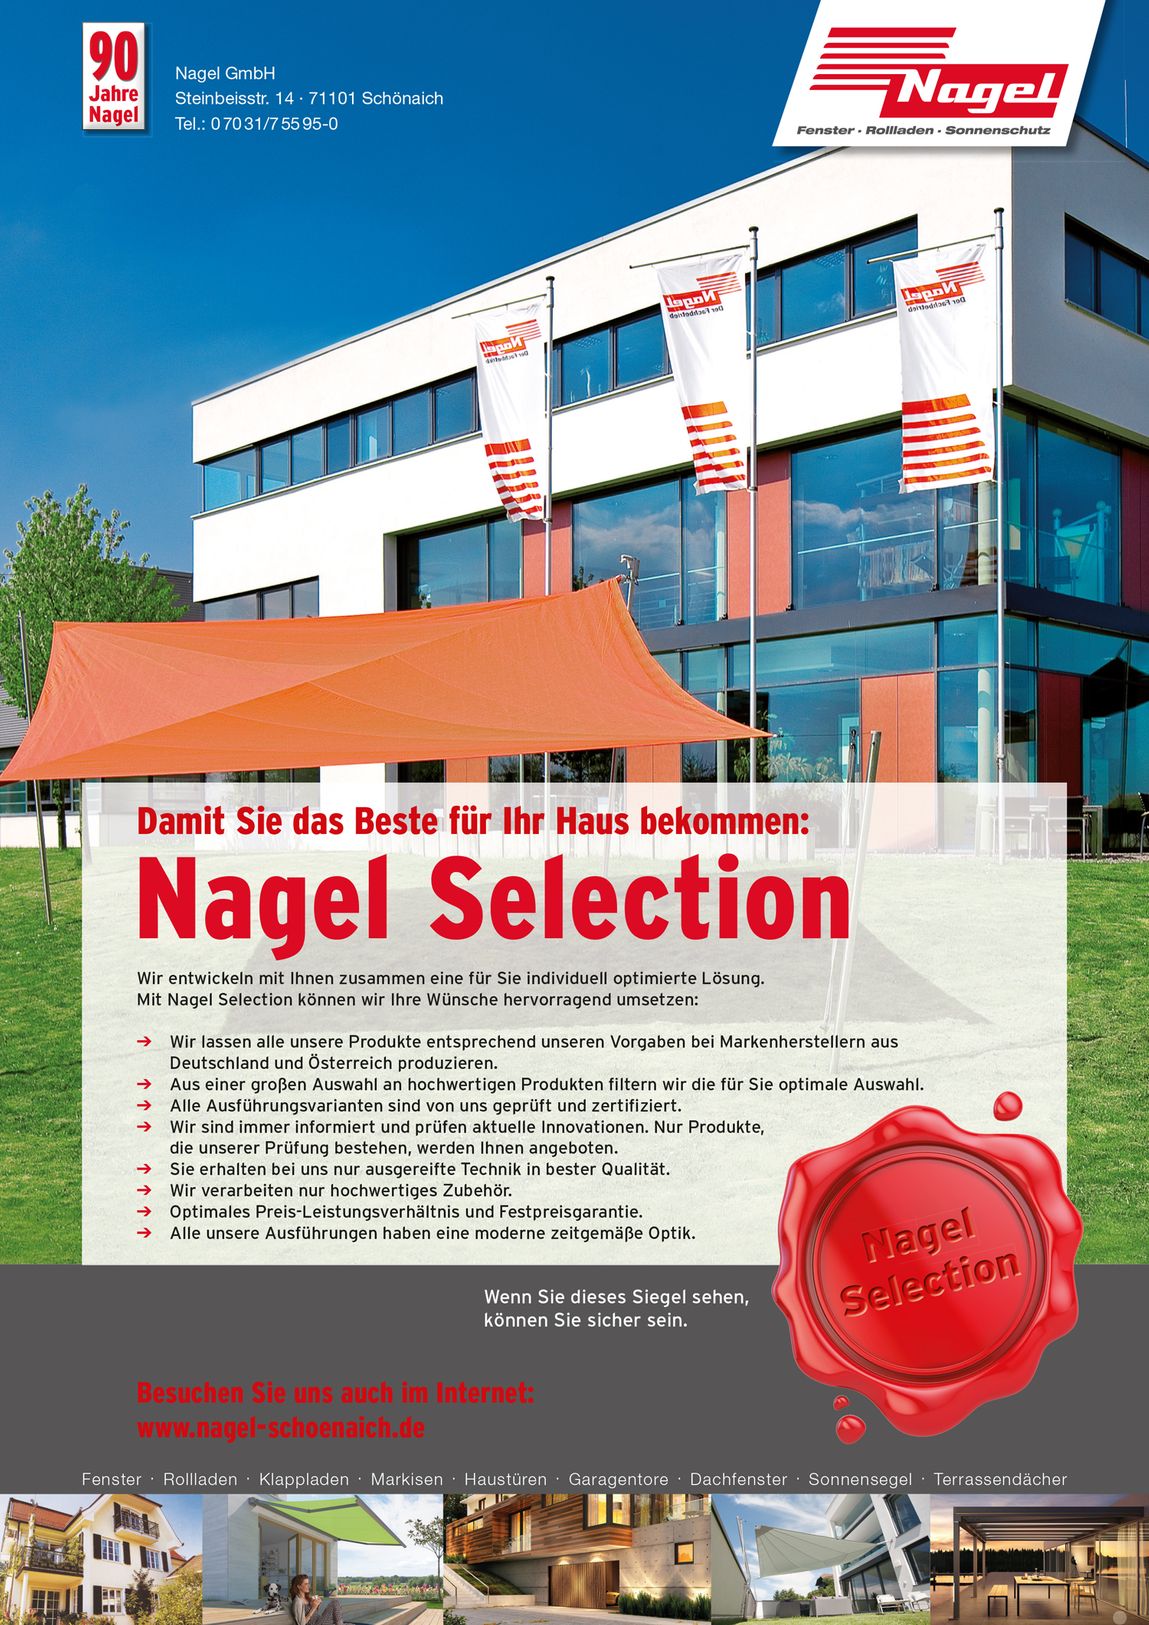 Nagel GmbH